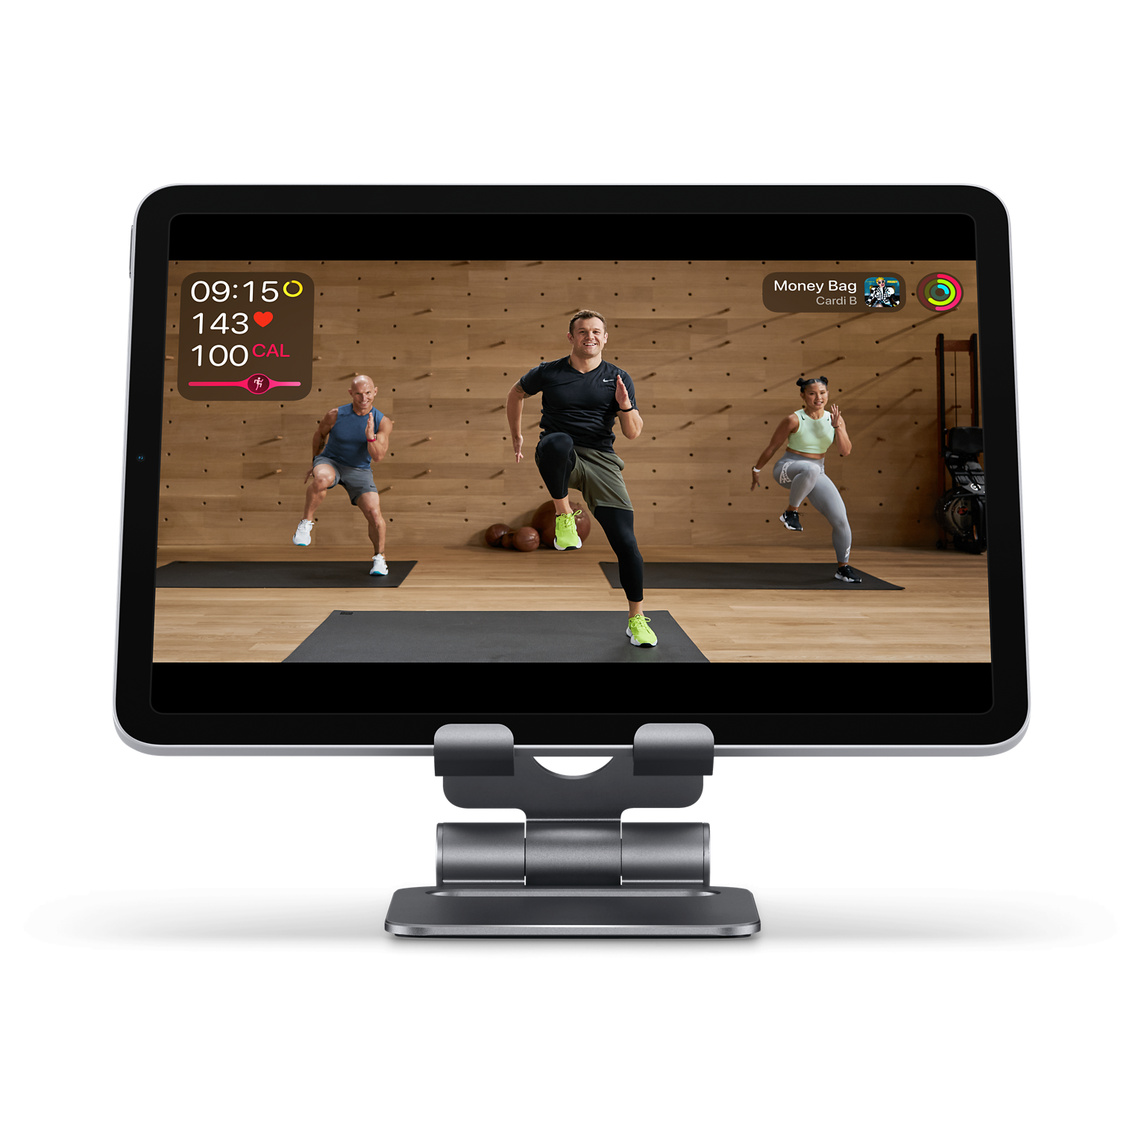 Satechi 摺合式鋁金屬企架可妥善固定好你的 iPhone 或 iPad，方便觀看健身影片或進行 FaceTime 通話。